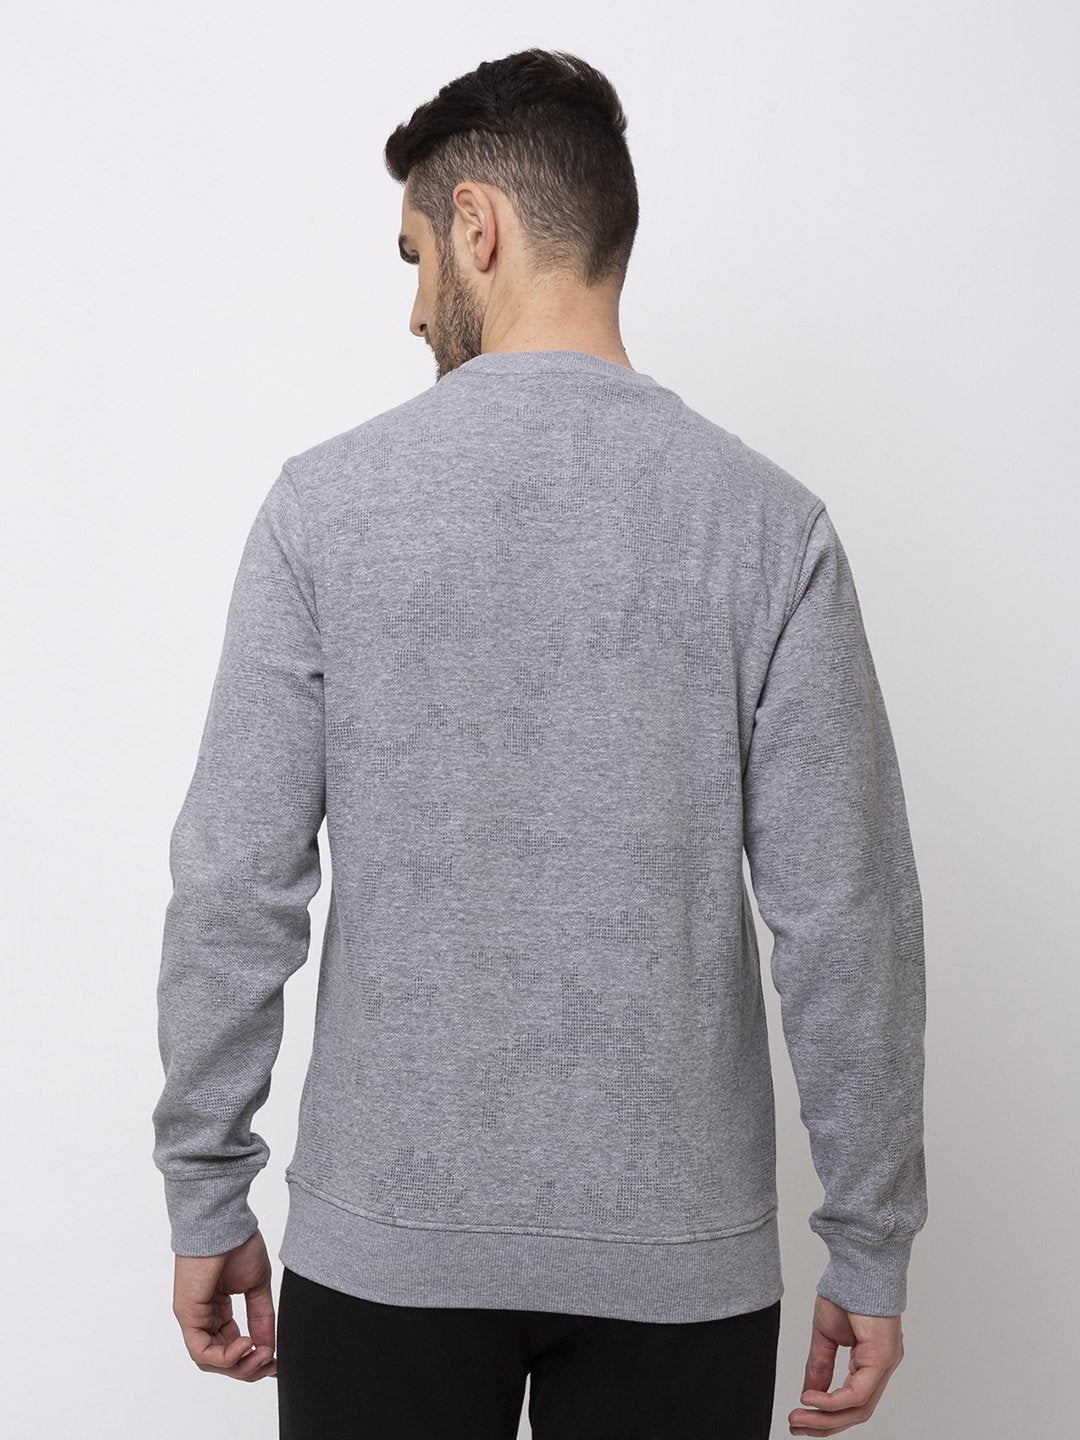 Status Quo | Men's Grey Polycotton Printed Sweatshirts 2